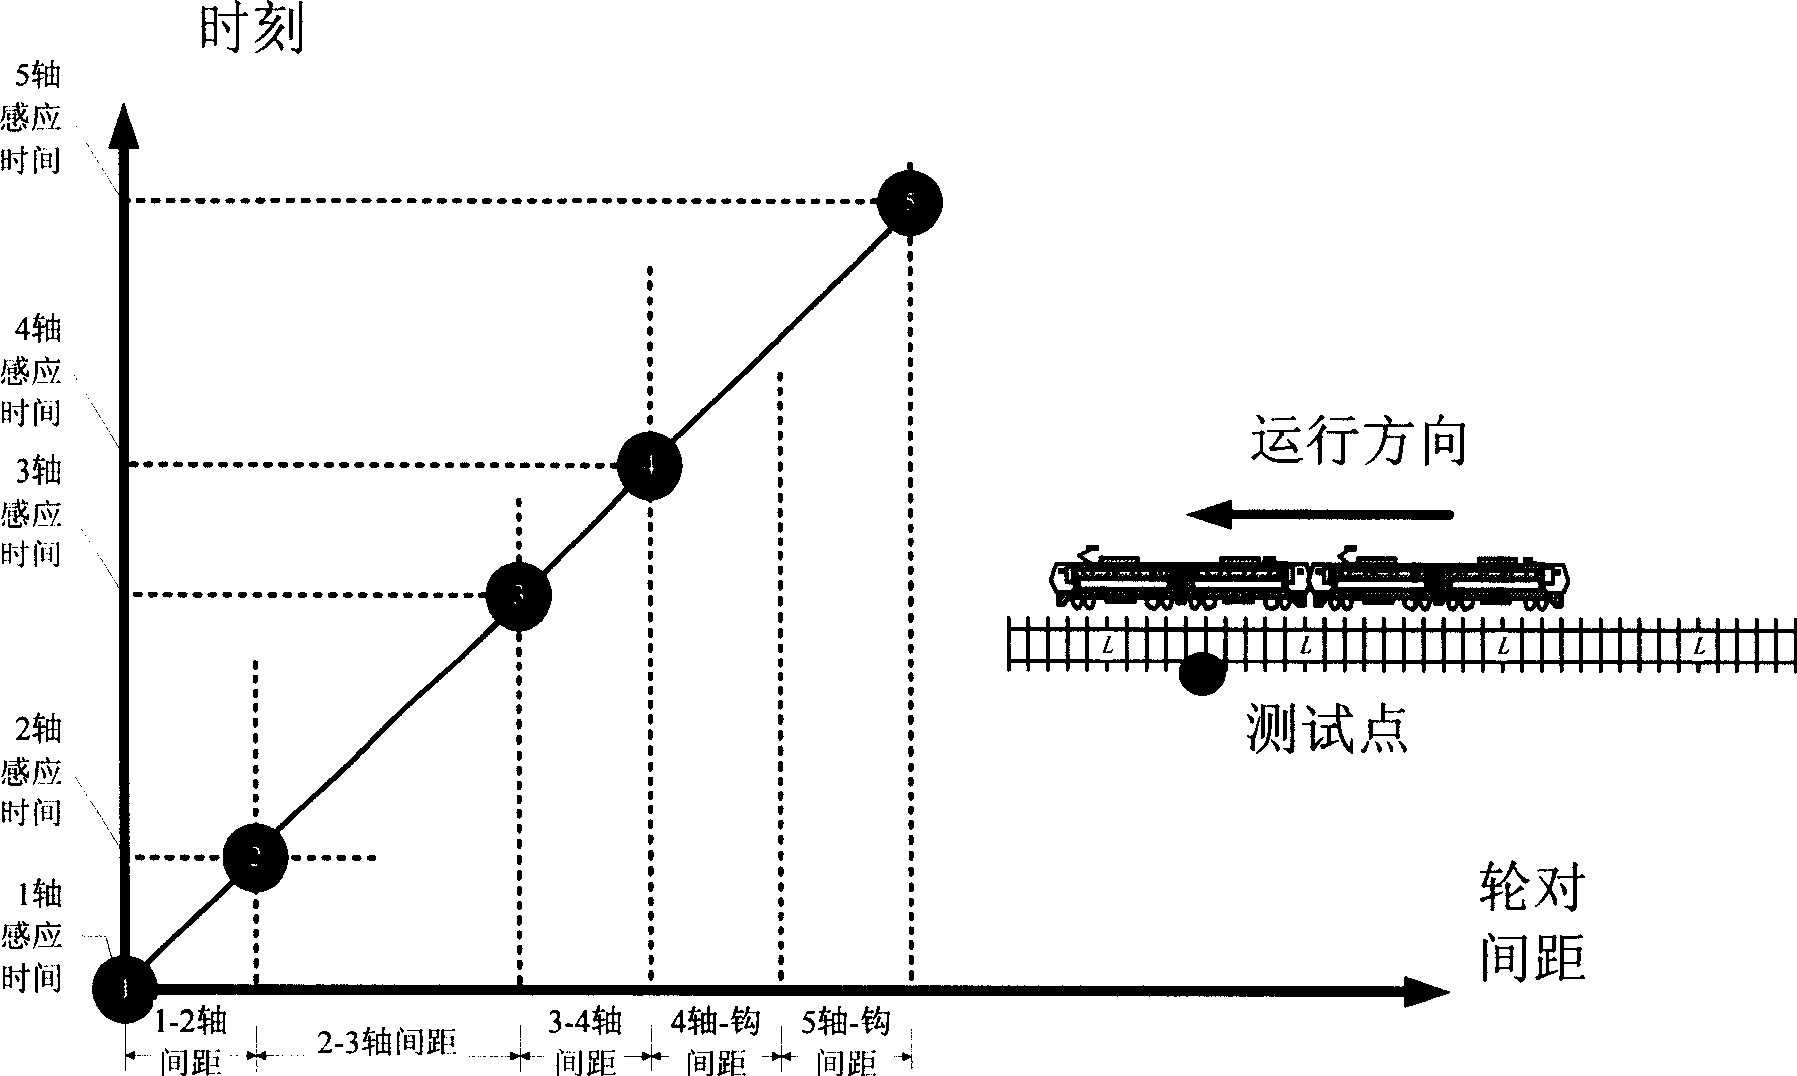 Vehicle speed measuring method based on steel rail deformation / stress parameters